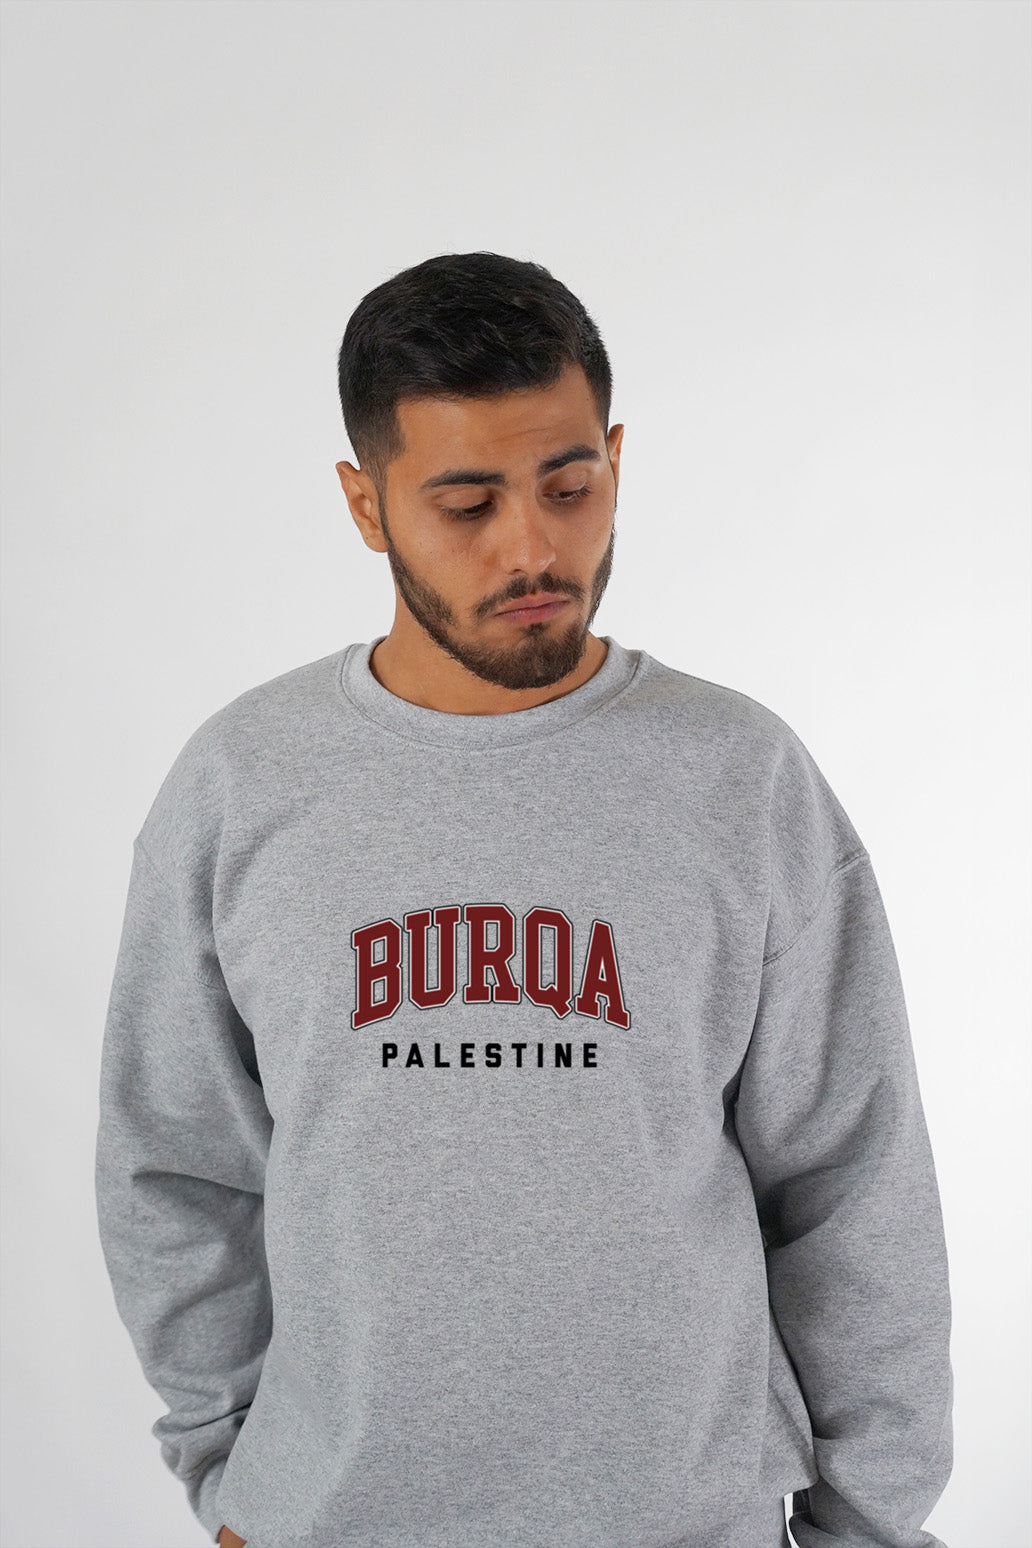 Burqa, Palestine - Sweatshirt